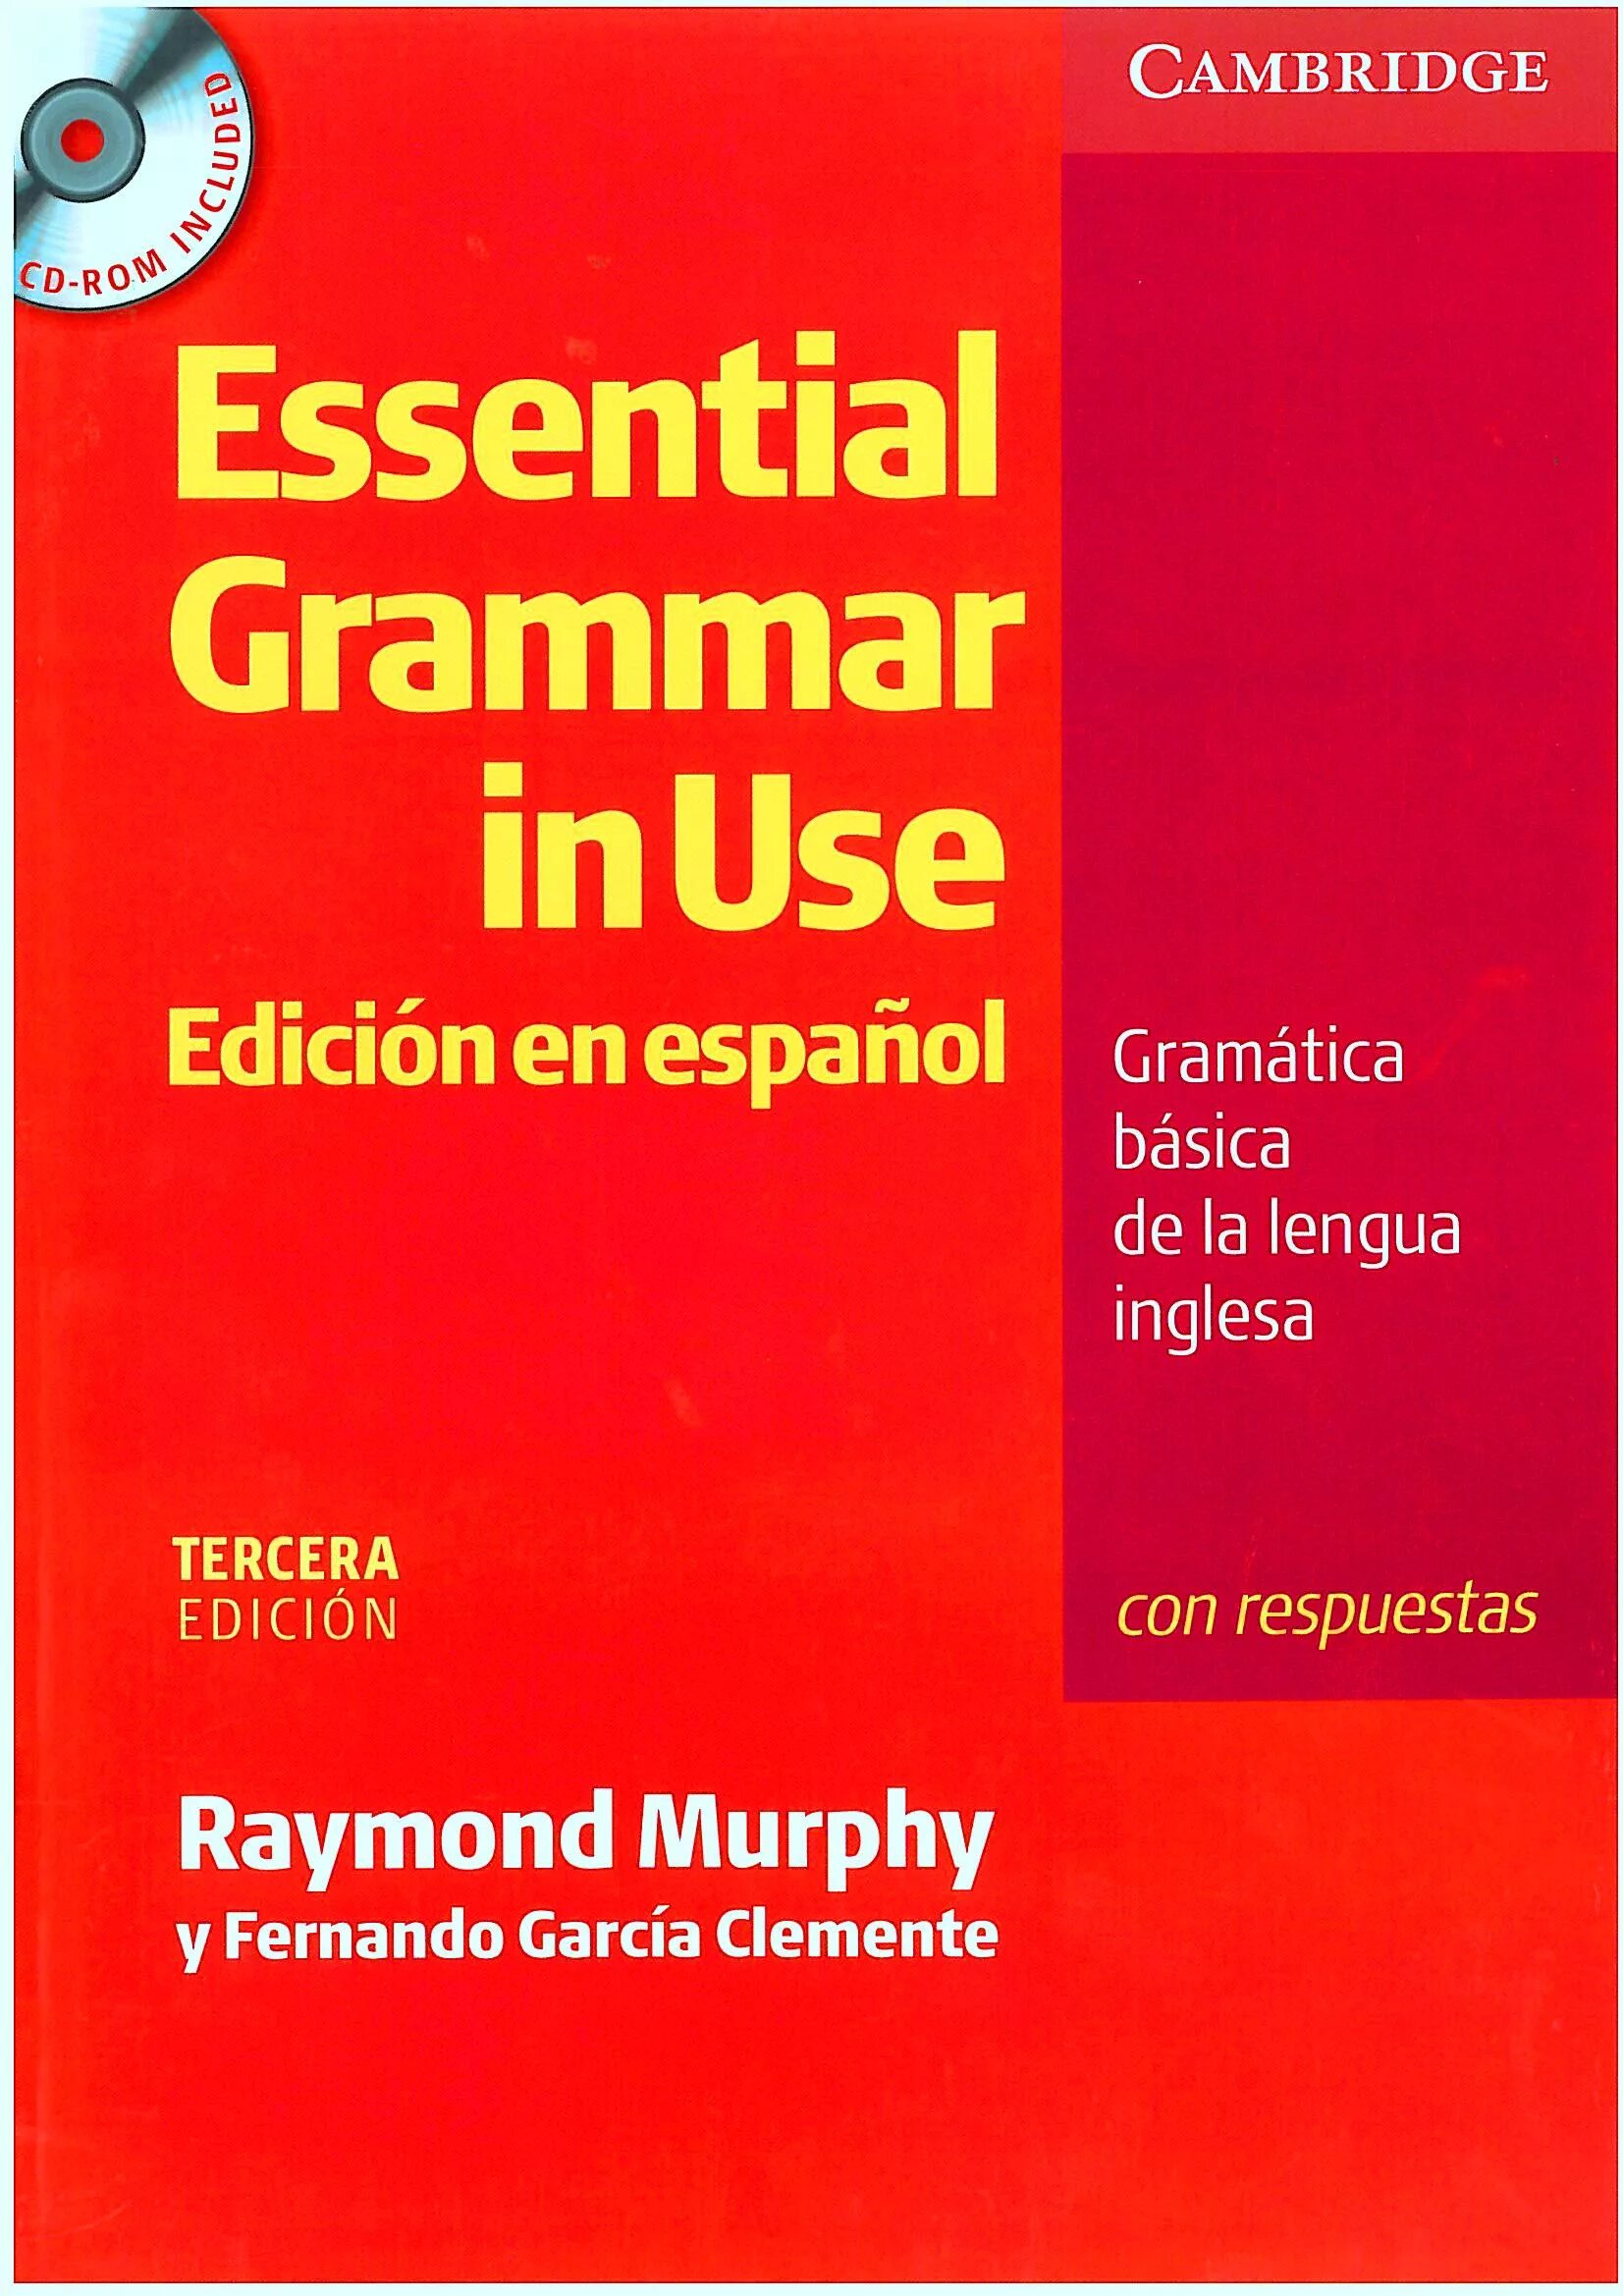 Essential Grammar in use Raymond Murphy красный Мёрфи. Английская грамматика in use Raymond Murphy.